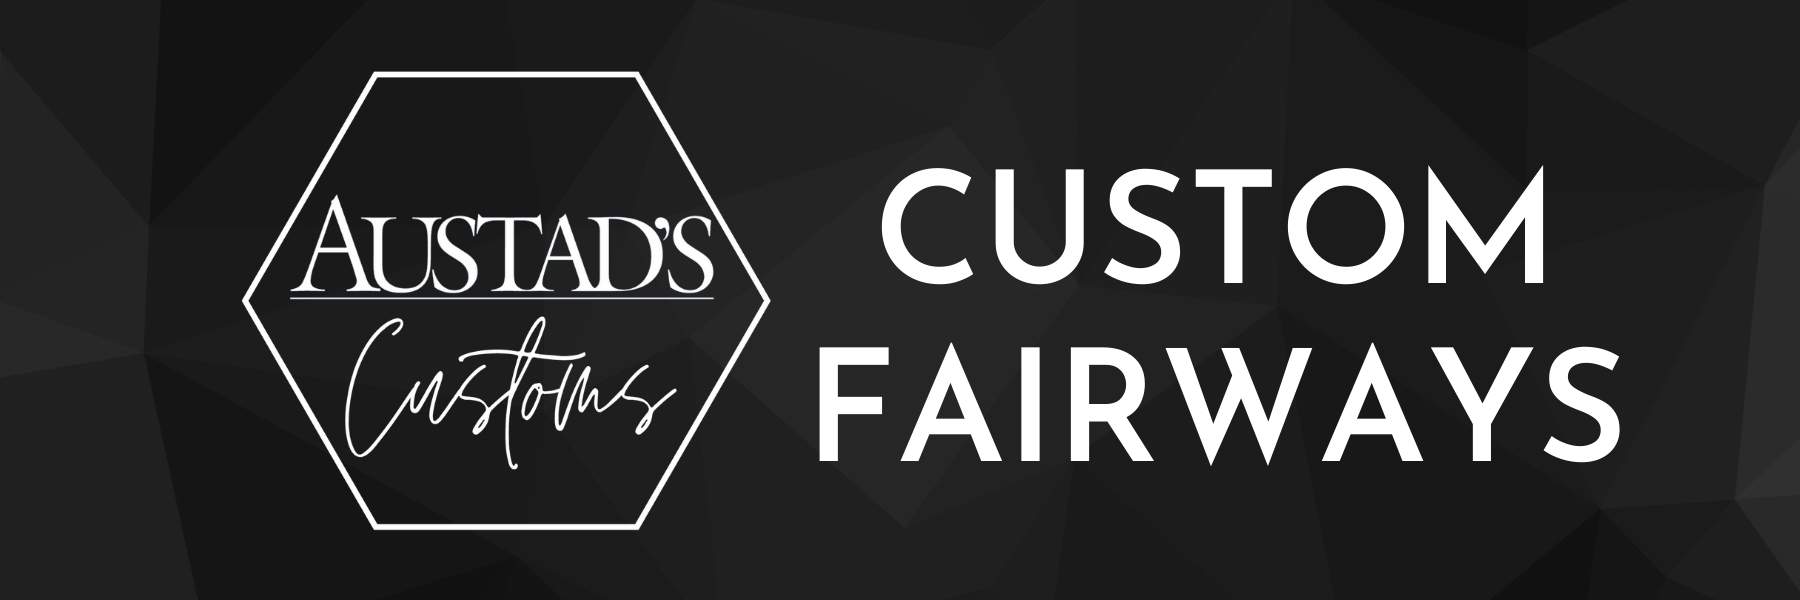 Custom Fairways